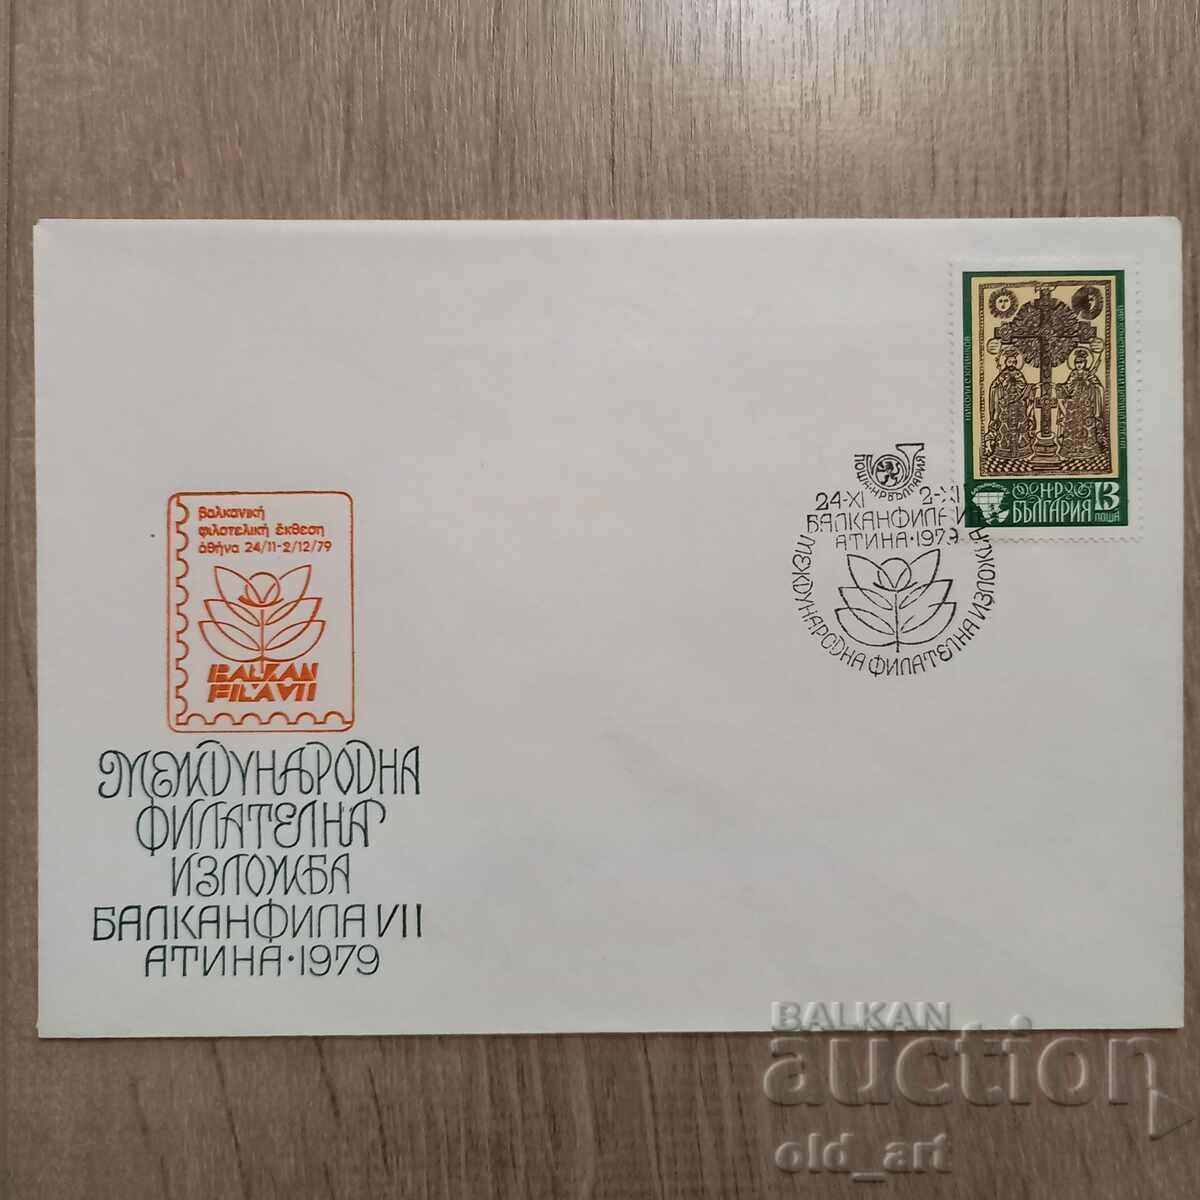 Plic postal - Int. Phil. expoziție Balkanfila Atena 79